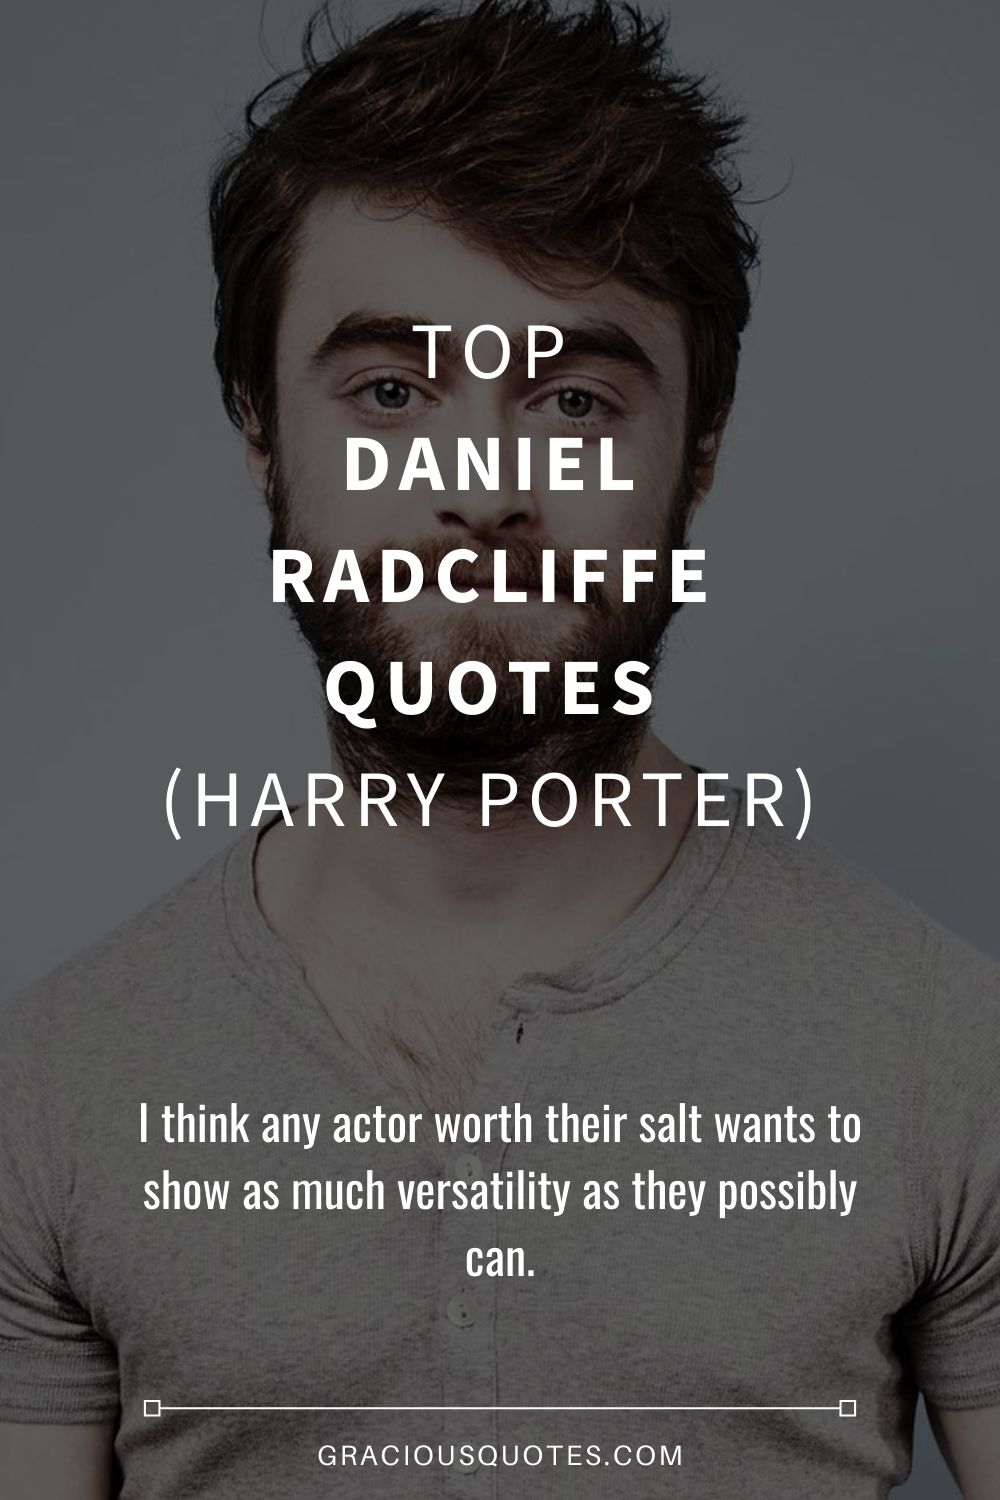 Top Daniel Radcliffe Quotes (HARRY PORTER) - Gracious Quotes